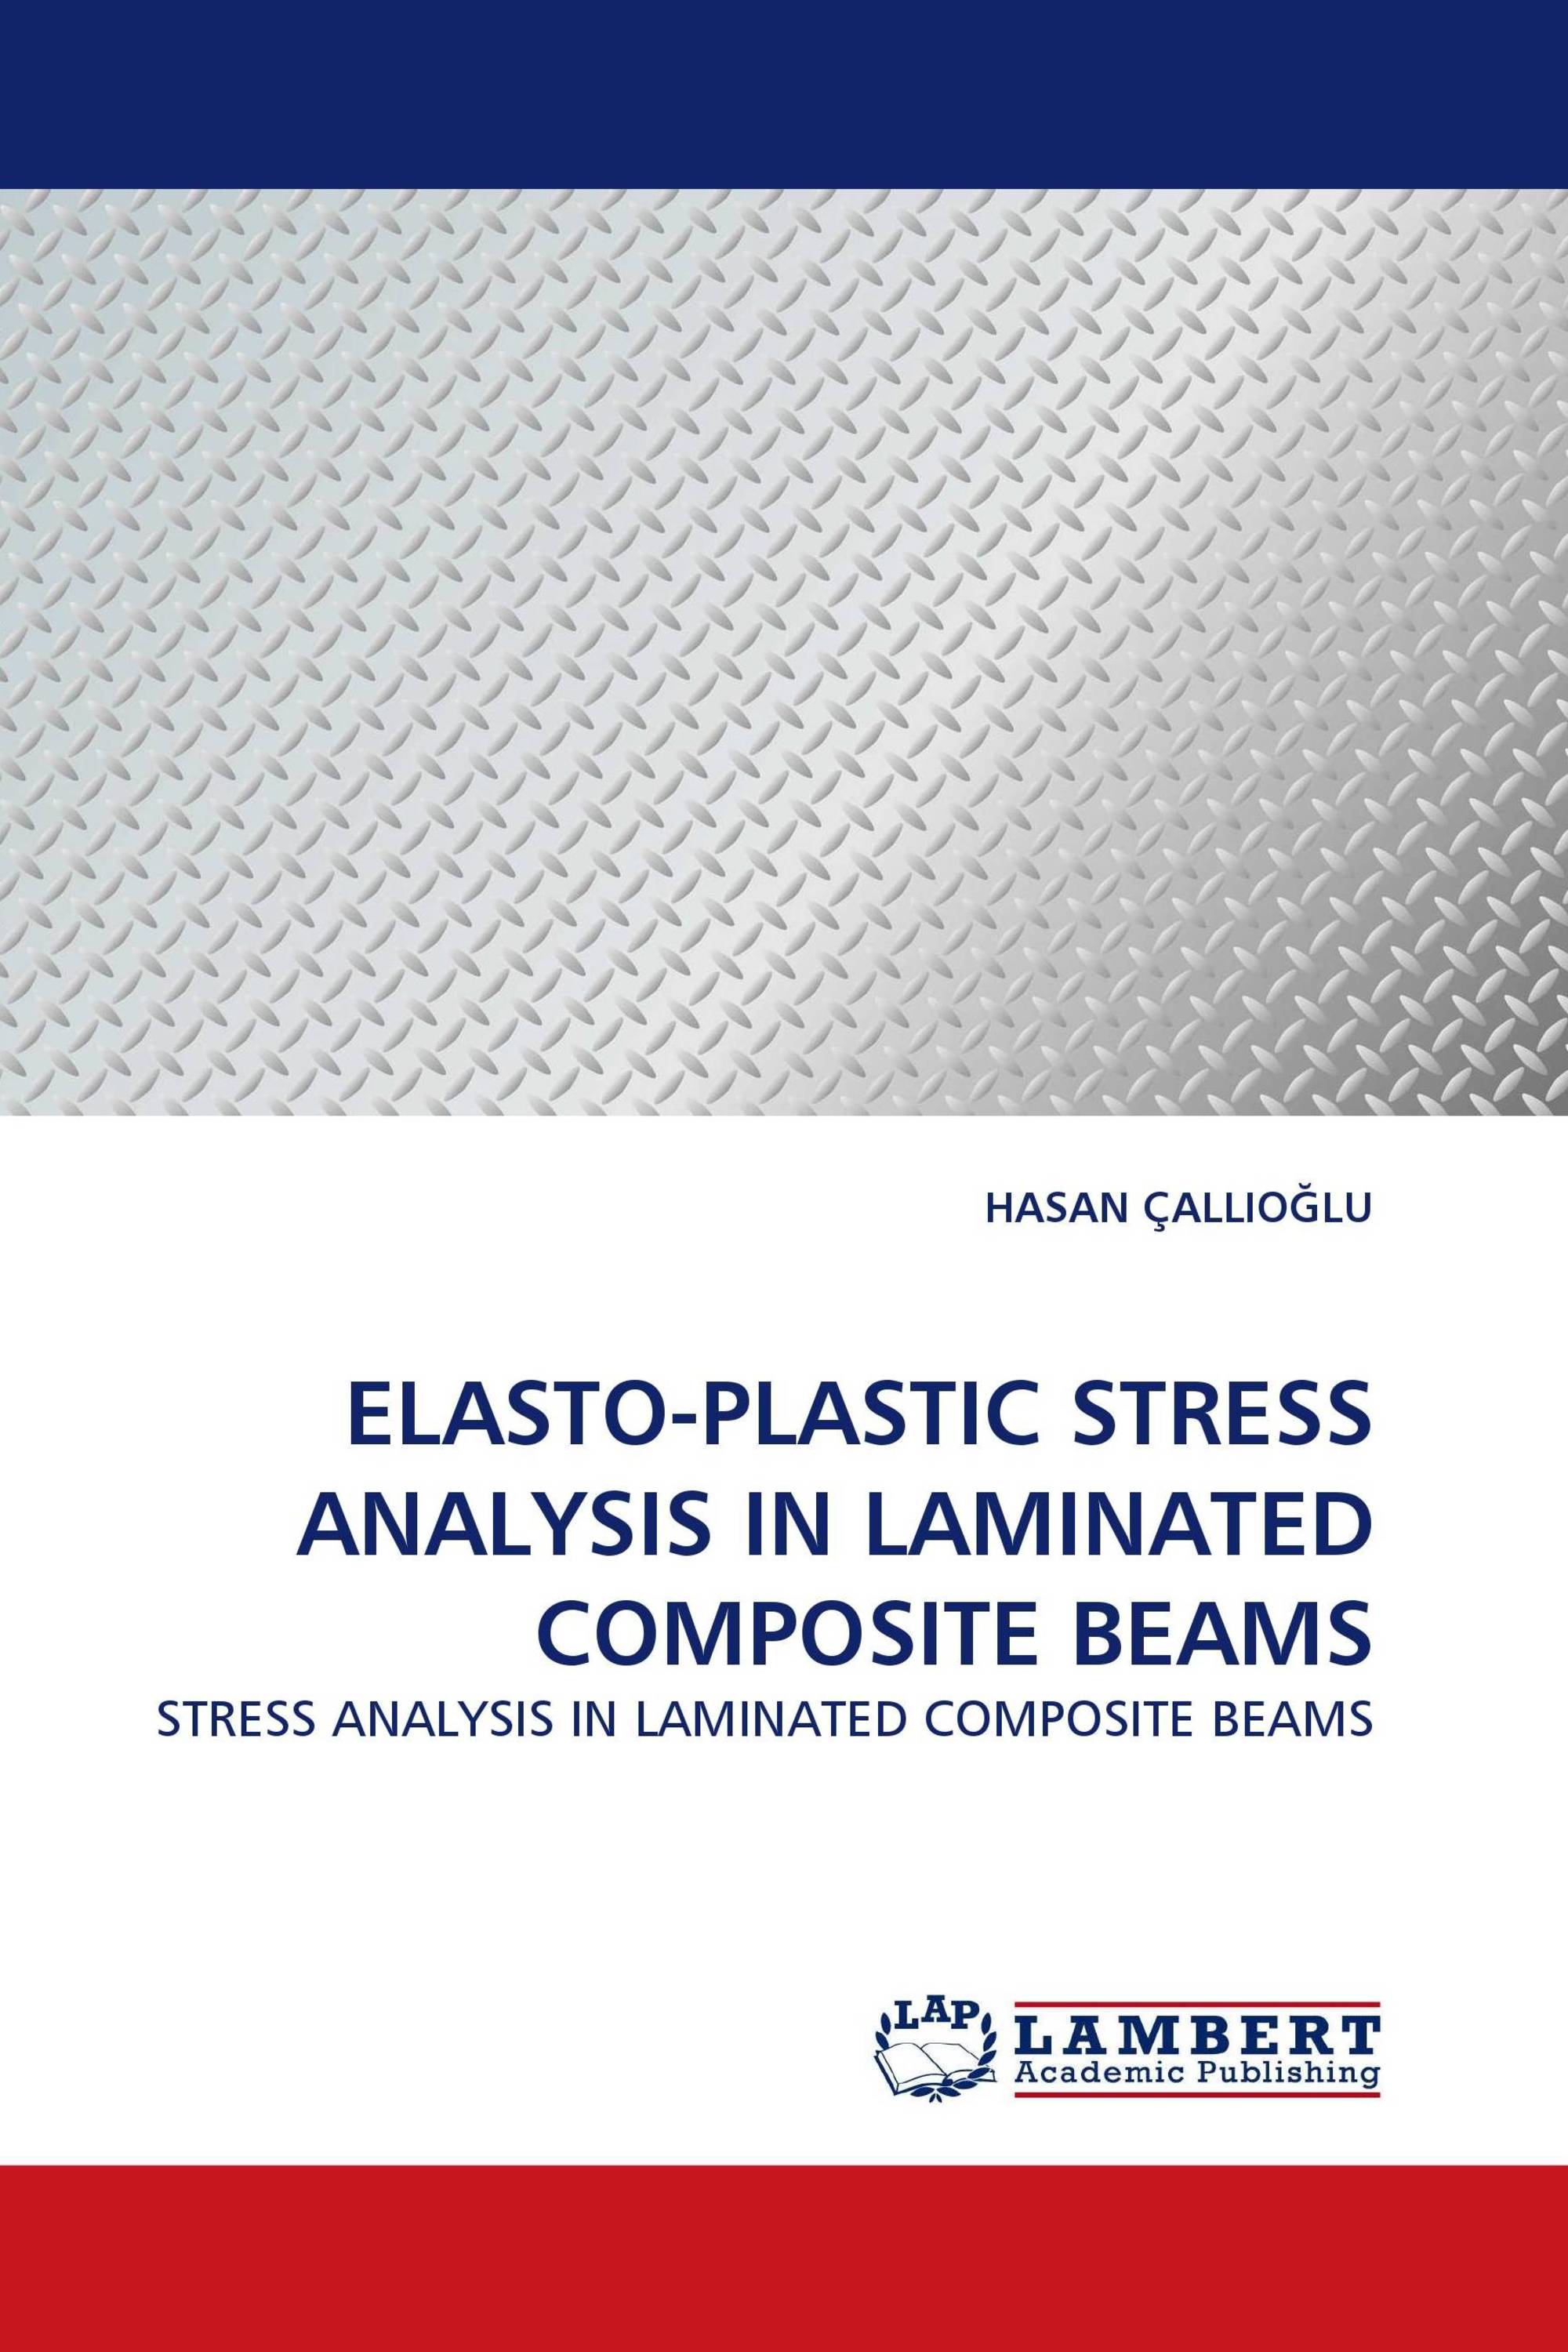 ELASTO-PLASTIC STRESS ANALYSIS IN LAMINATED COMPOSITE BEAMS